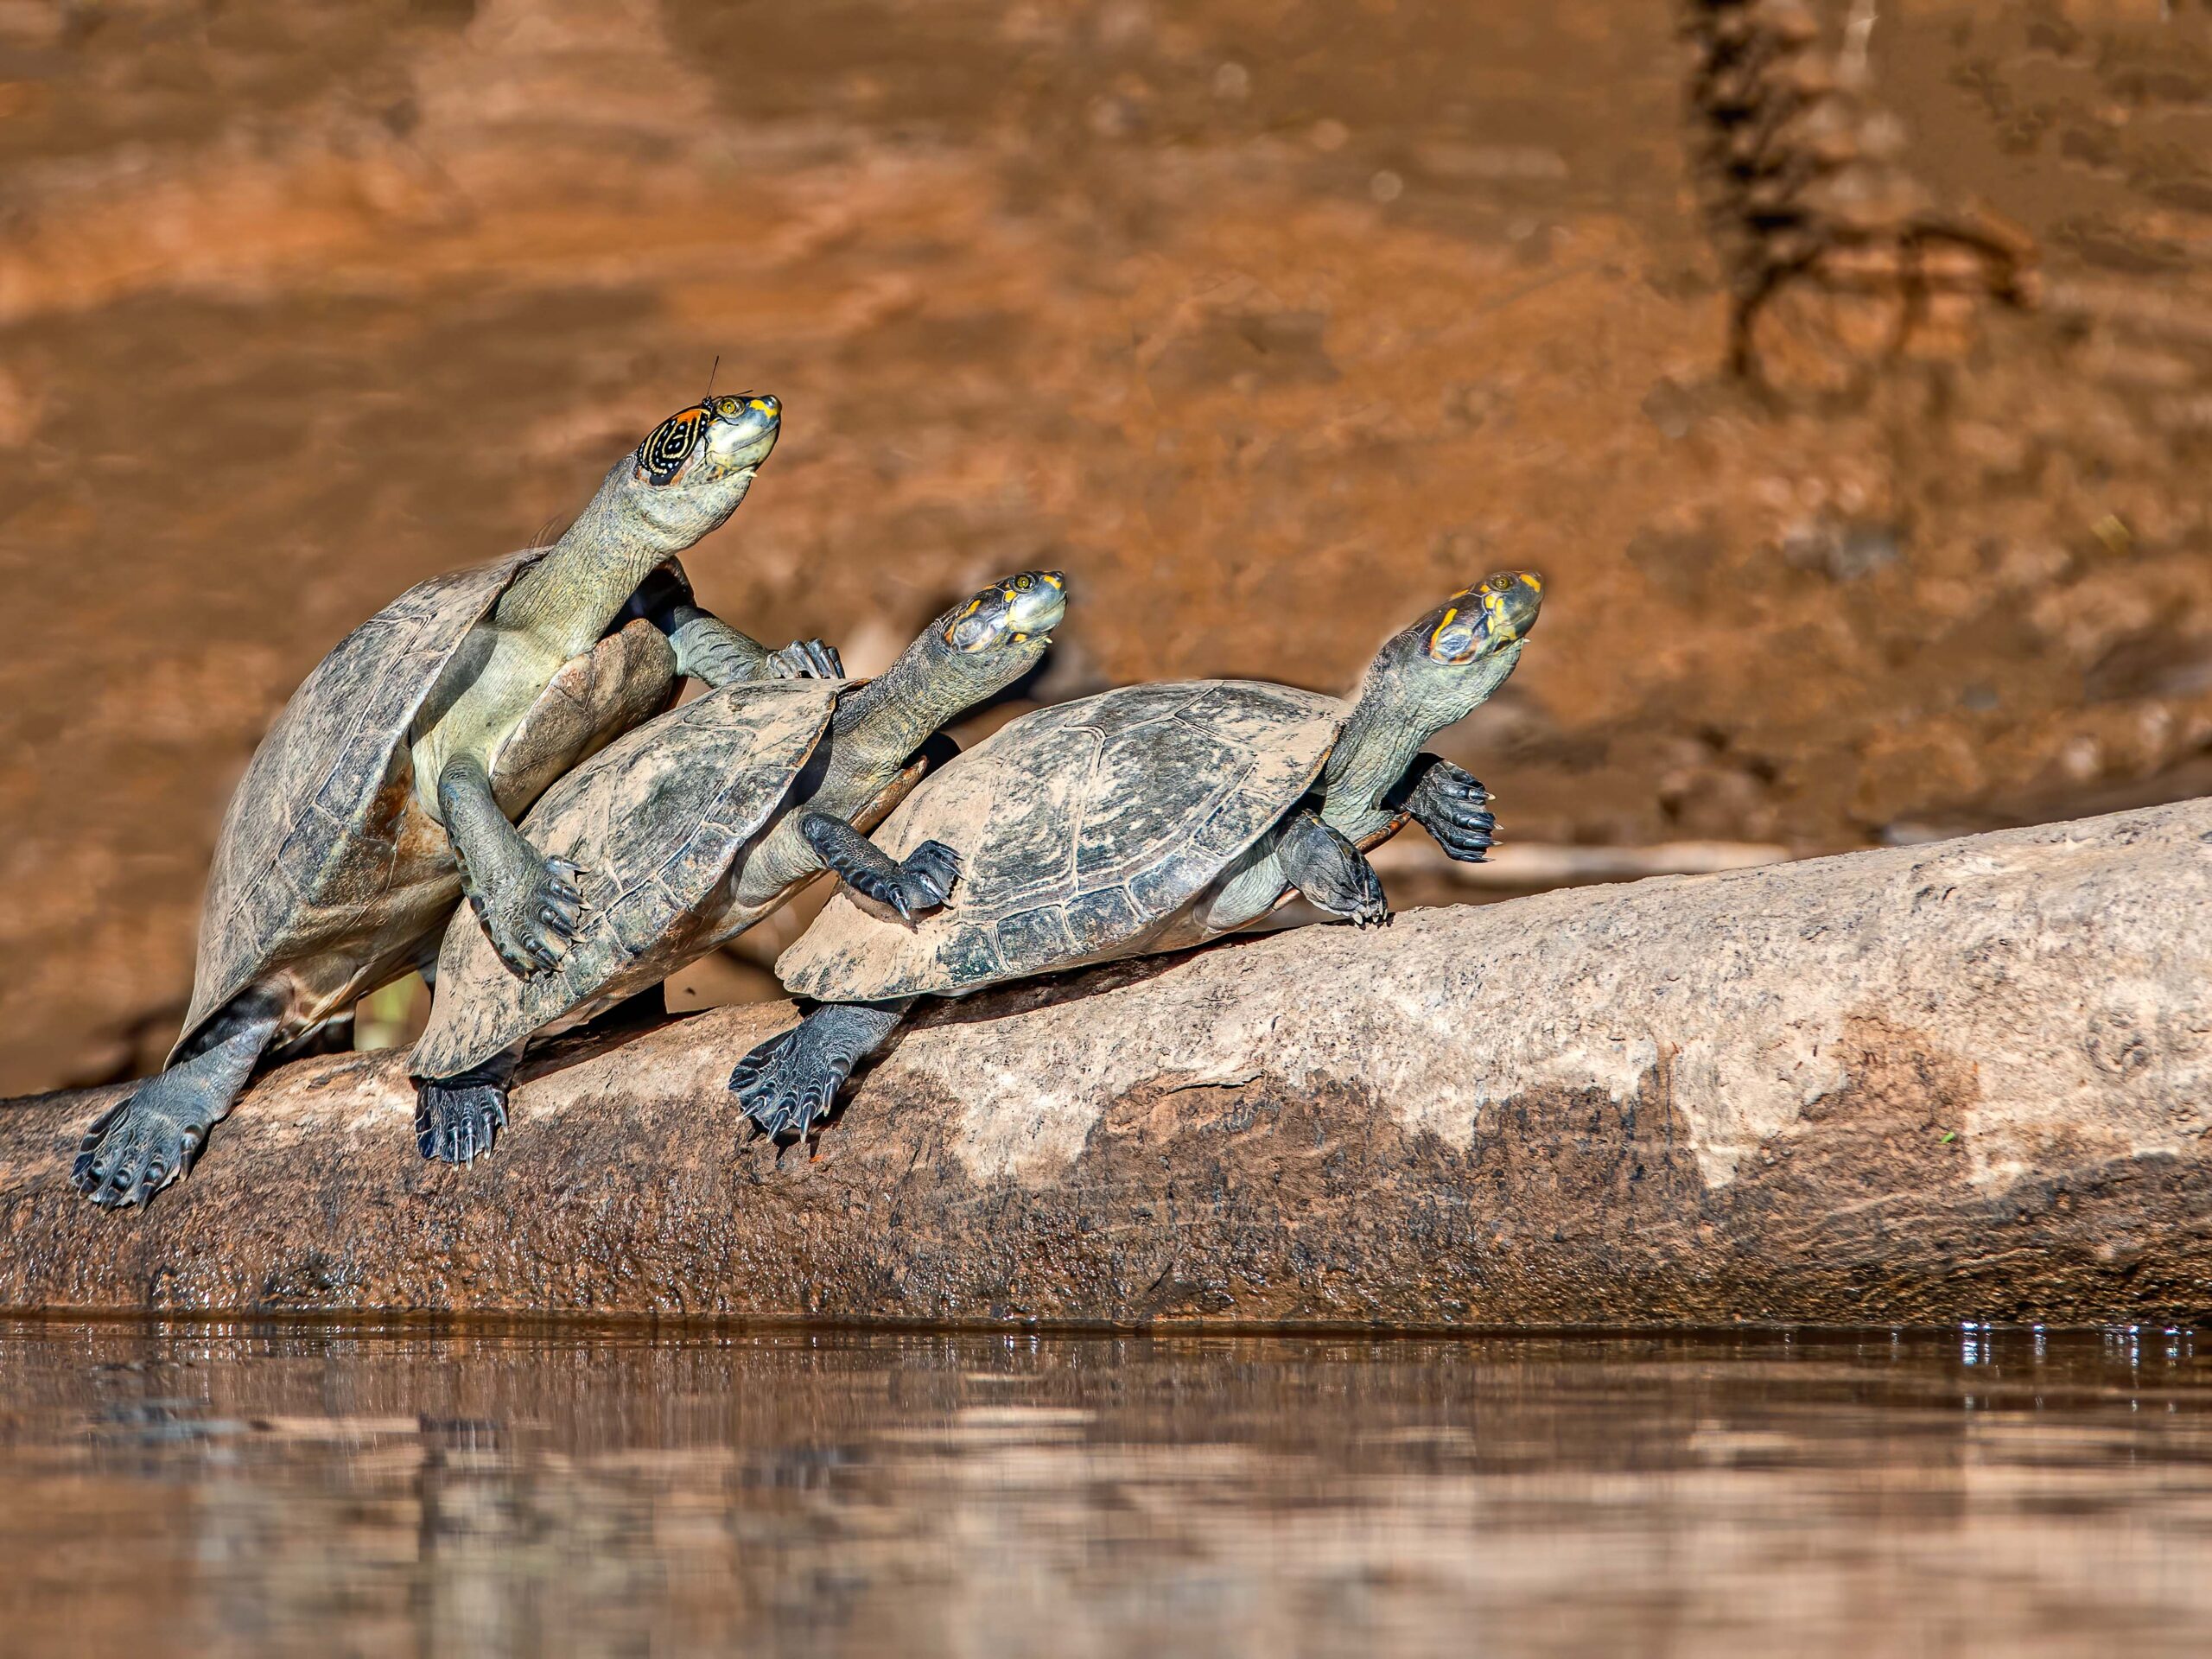 Turtles in the Peruvian Amazon